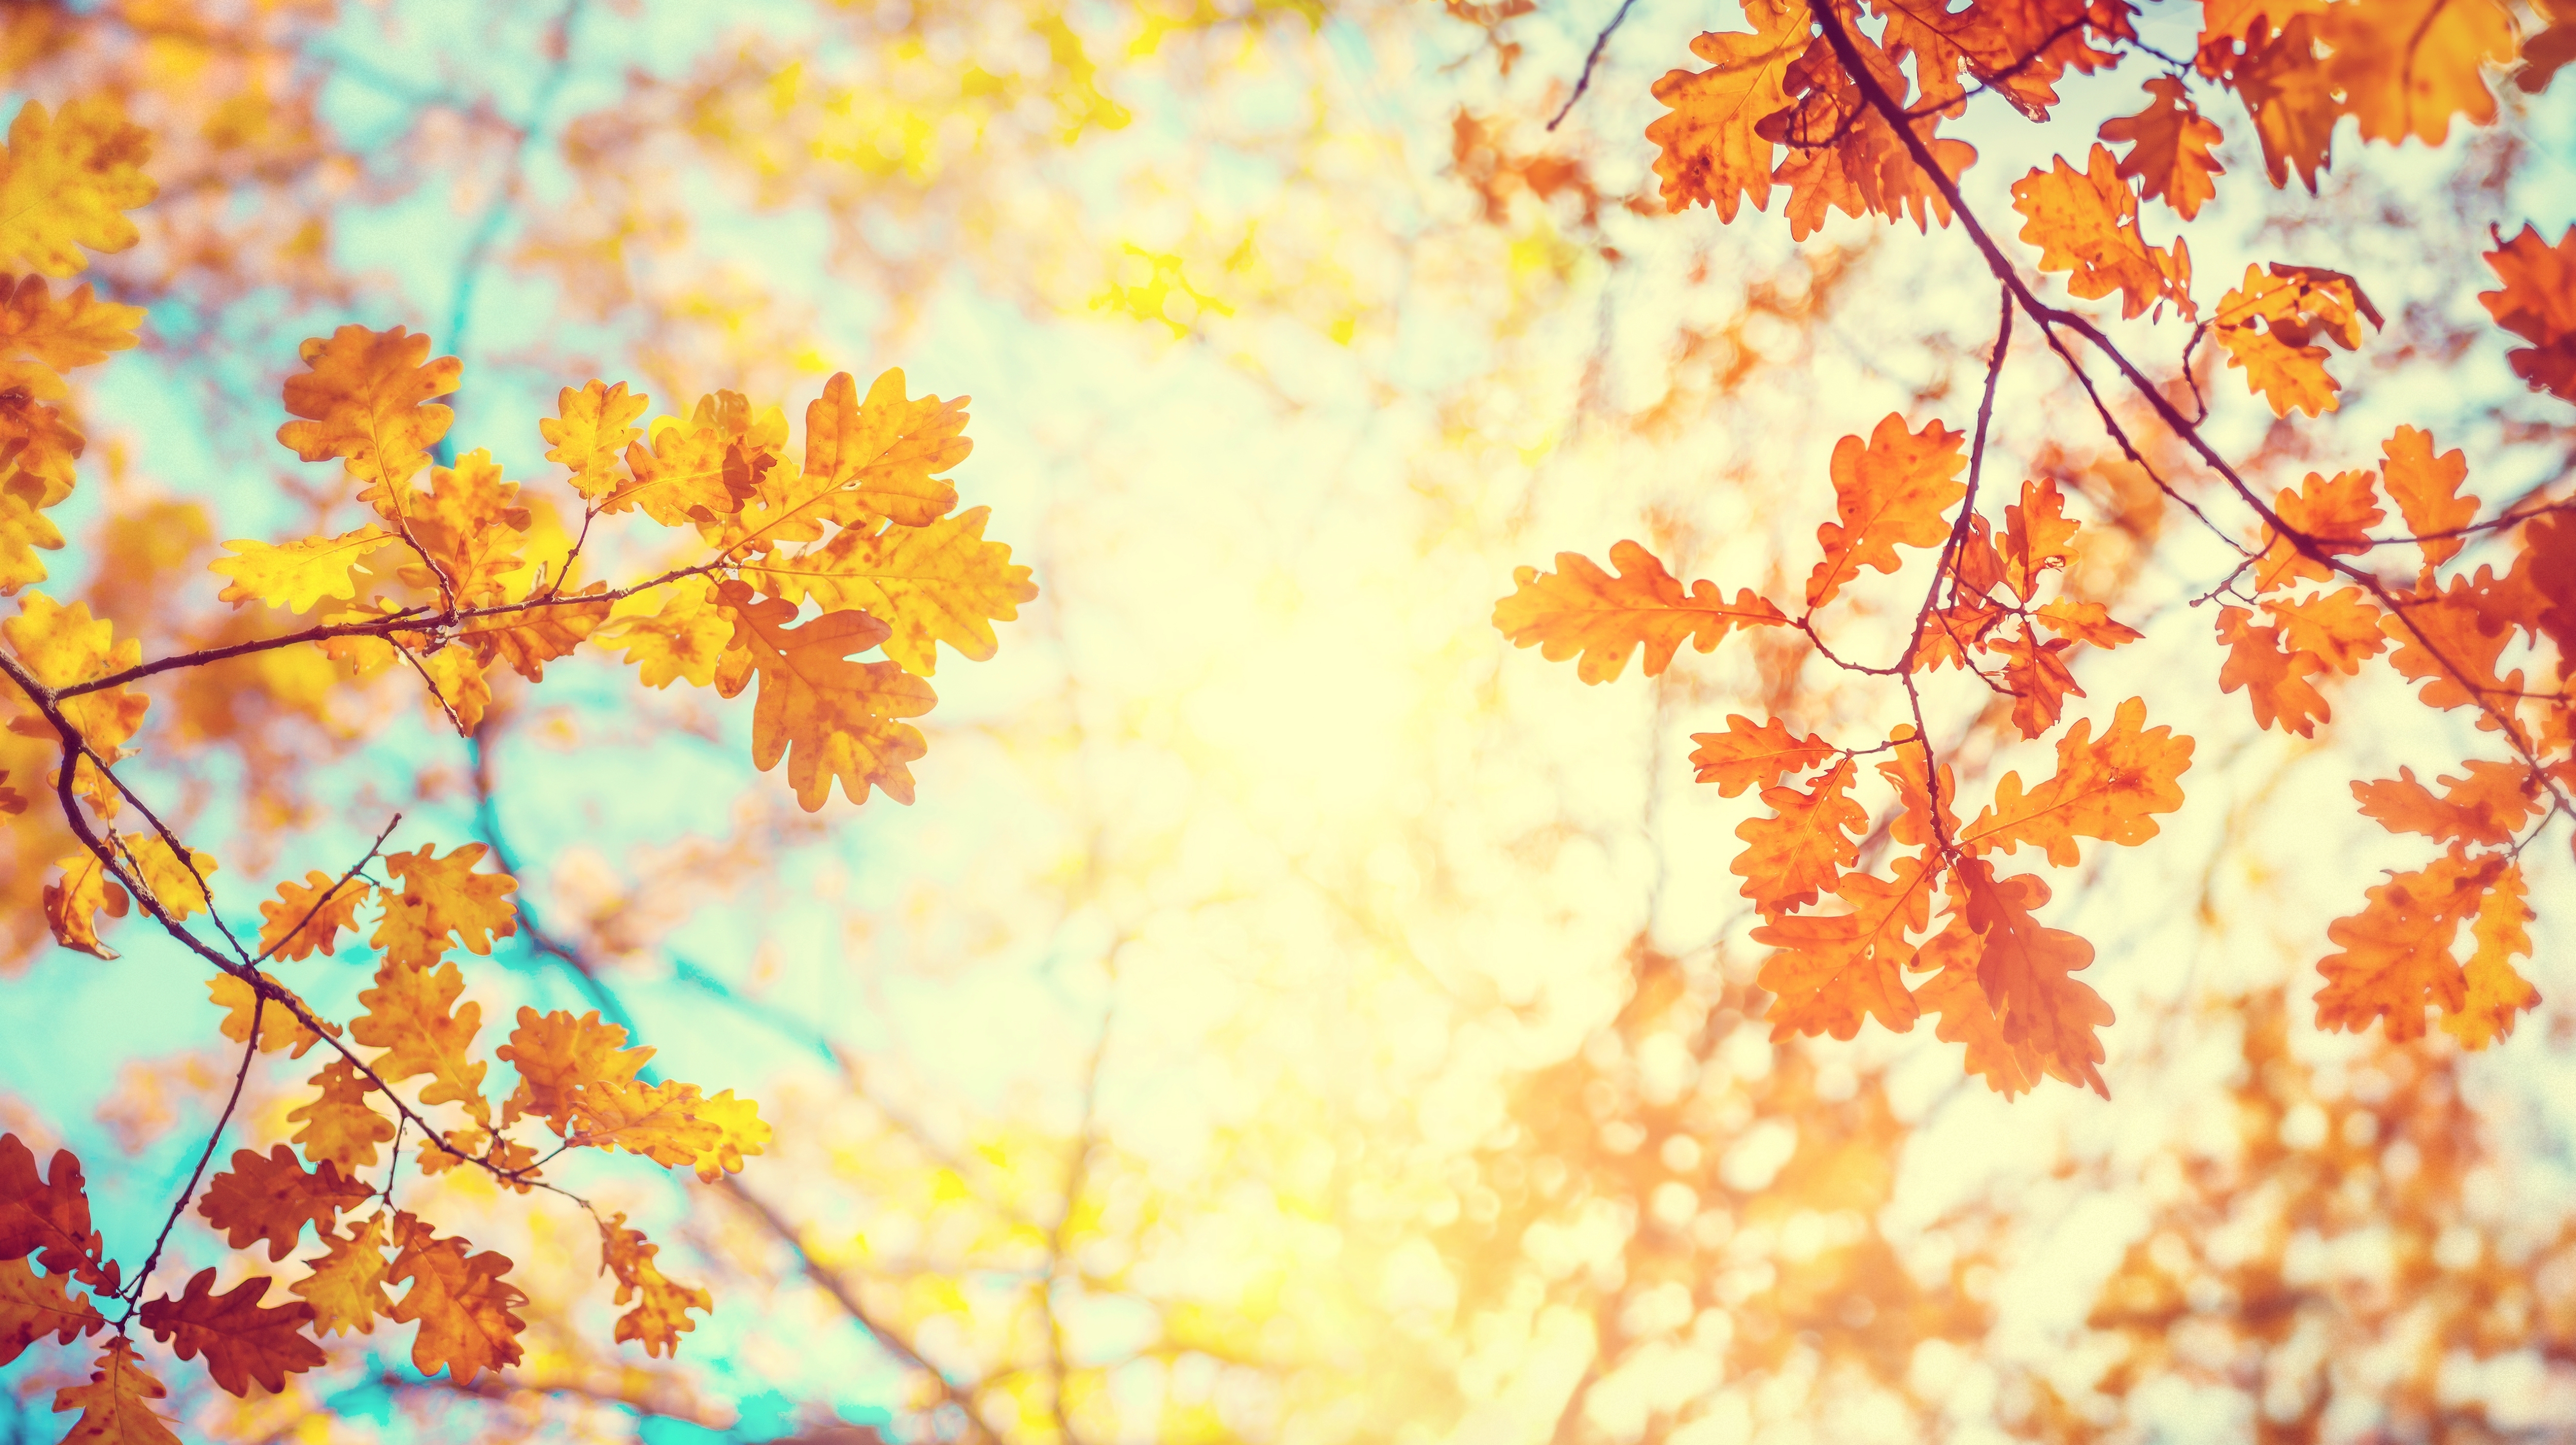 Autumn landscape | Source: Shutterstock